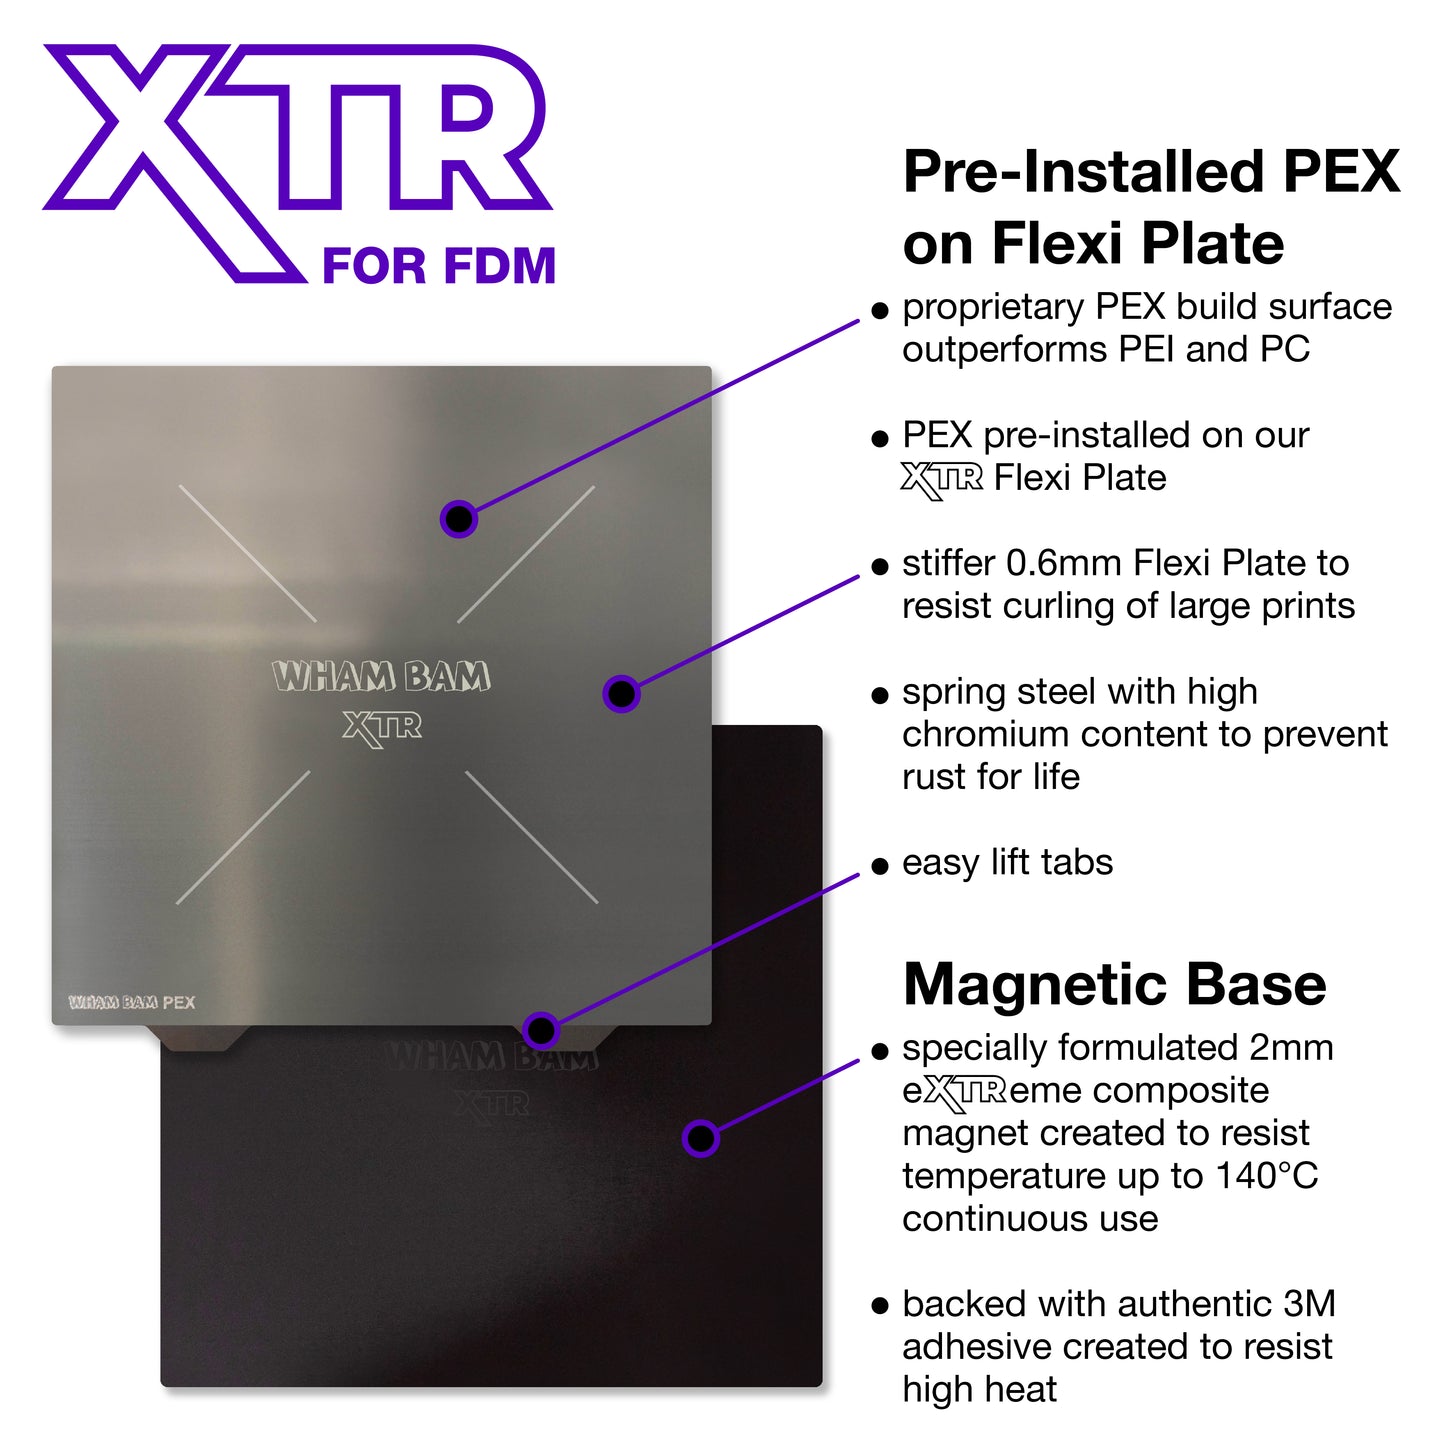 305 x 305 - XTR - Kit with Pre-Installed PEX Build Surface - Voron 2.4 300/Trident 300